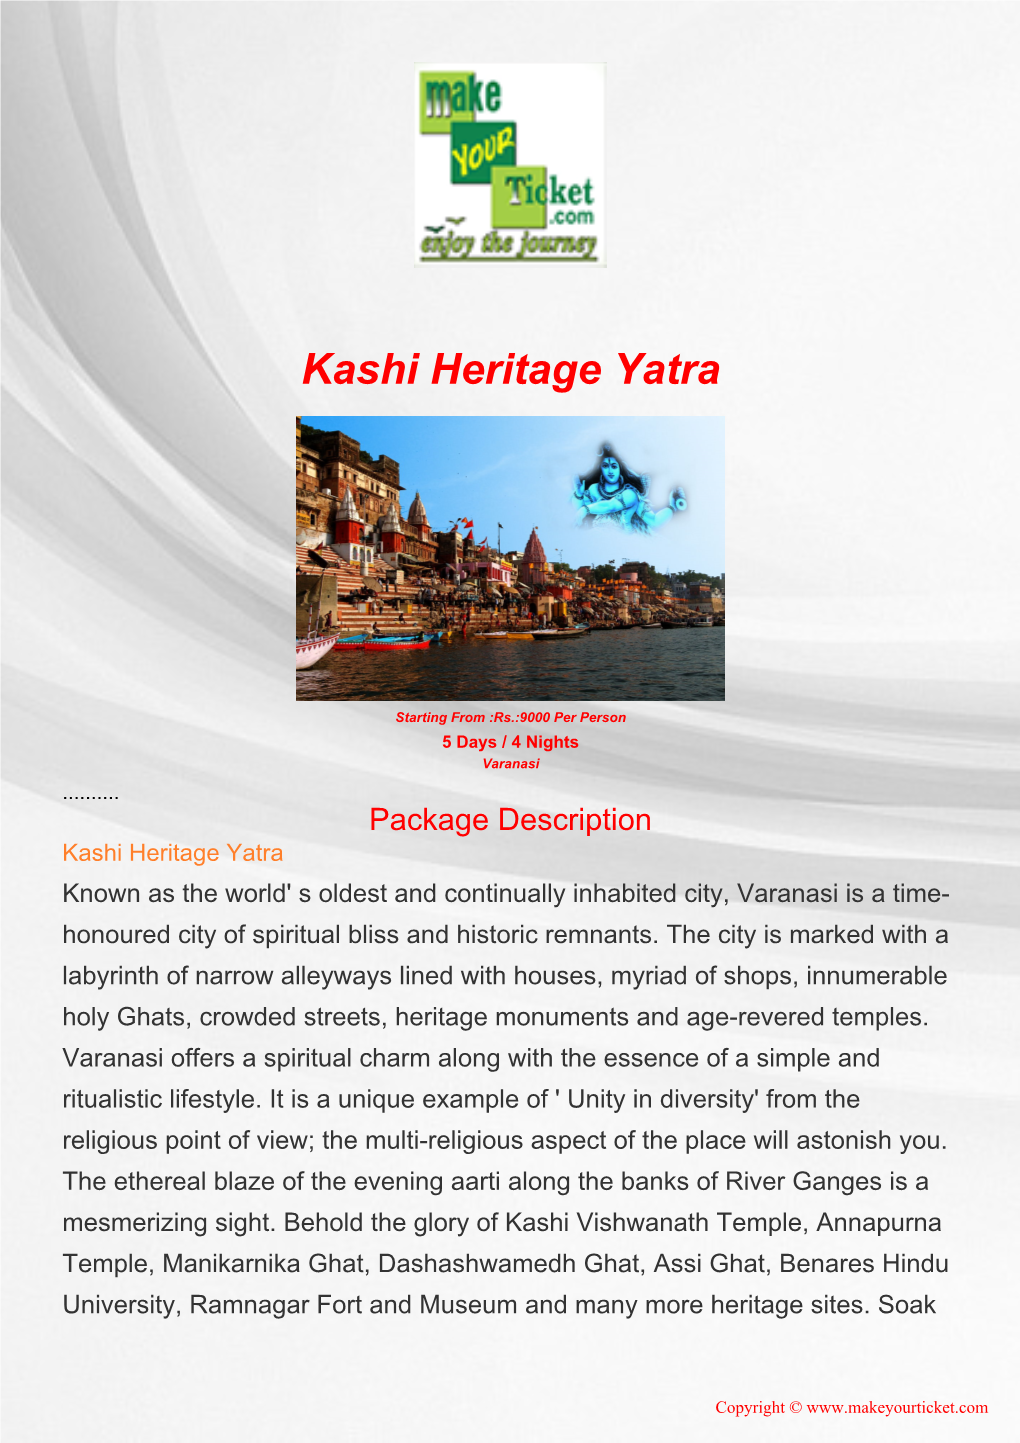 Kashi Heritage Yatra